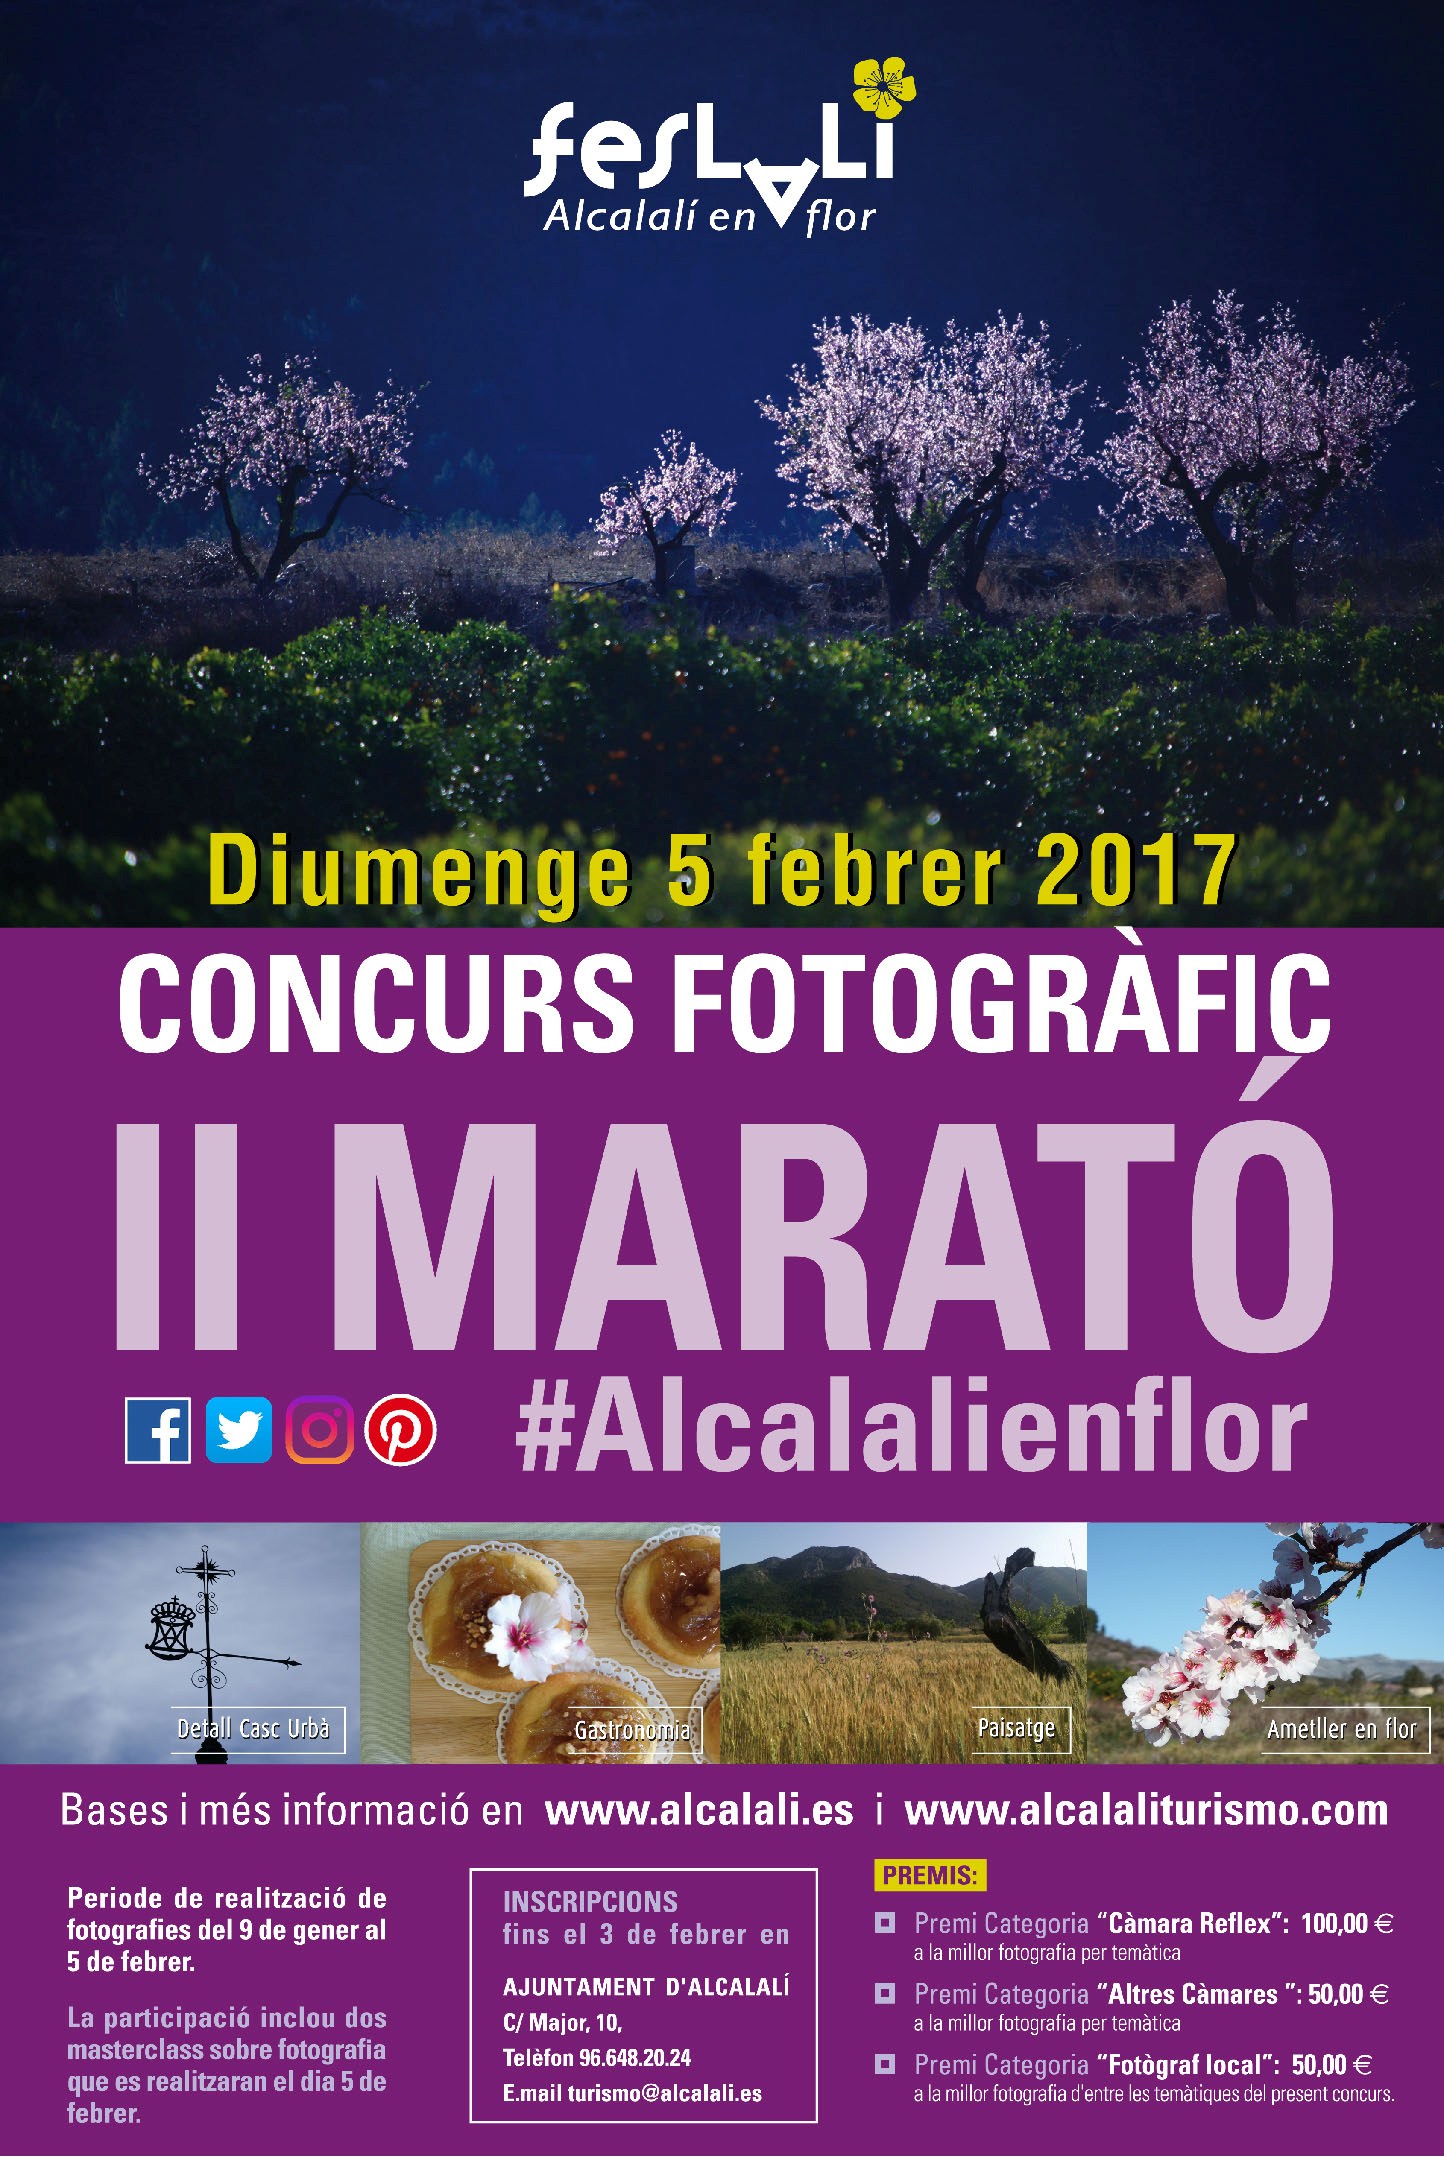 Concurso Fotografia II Maratón #alcalalienflor